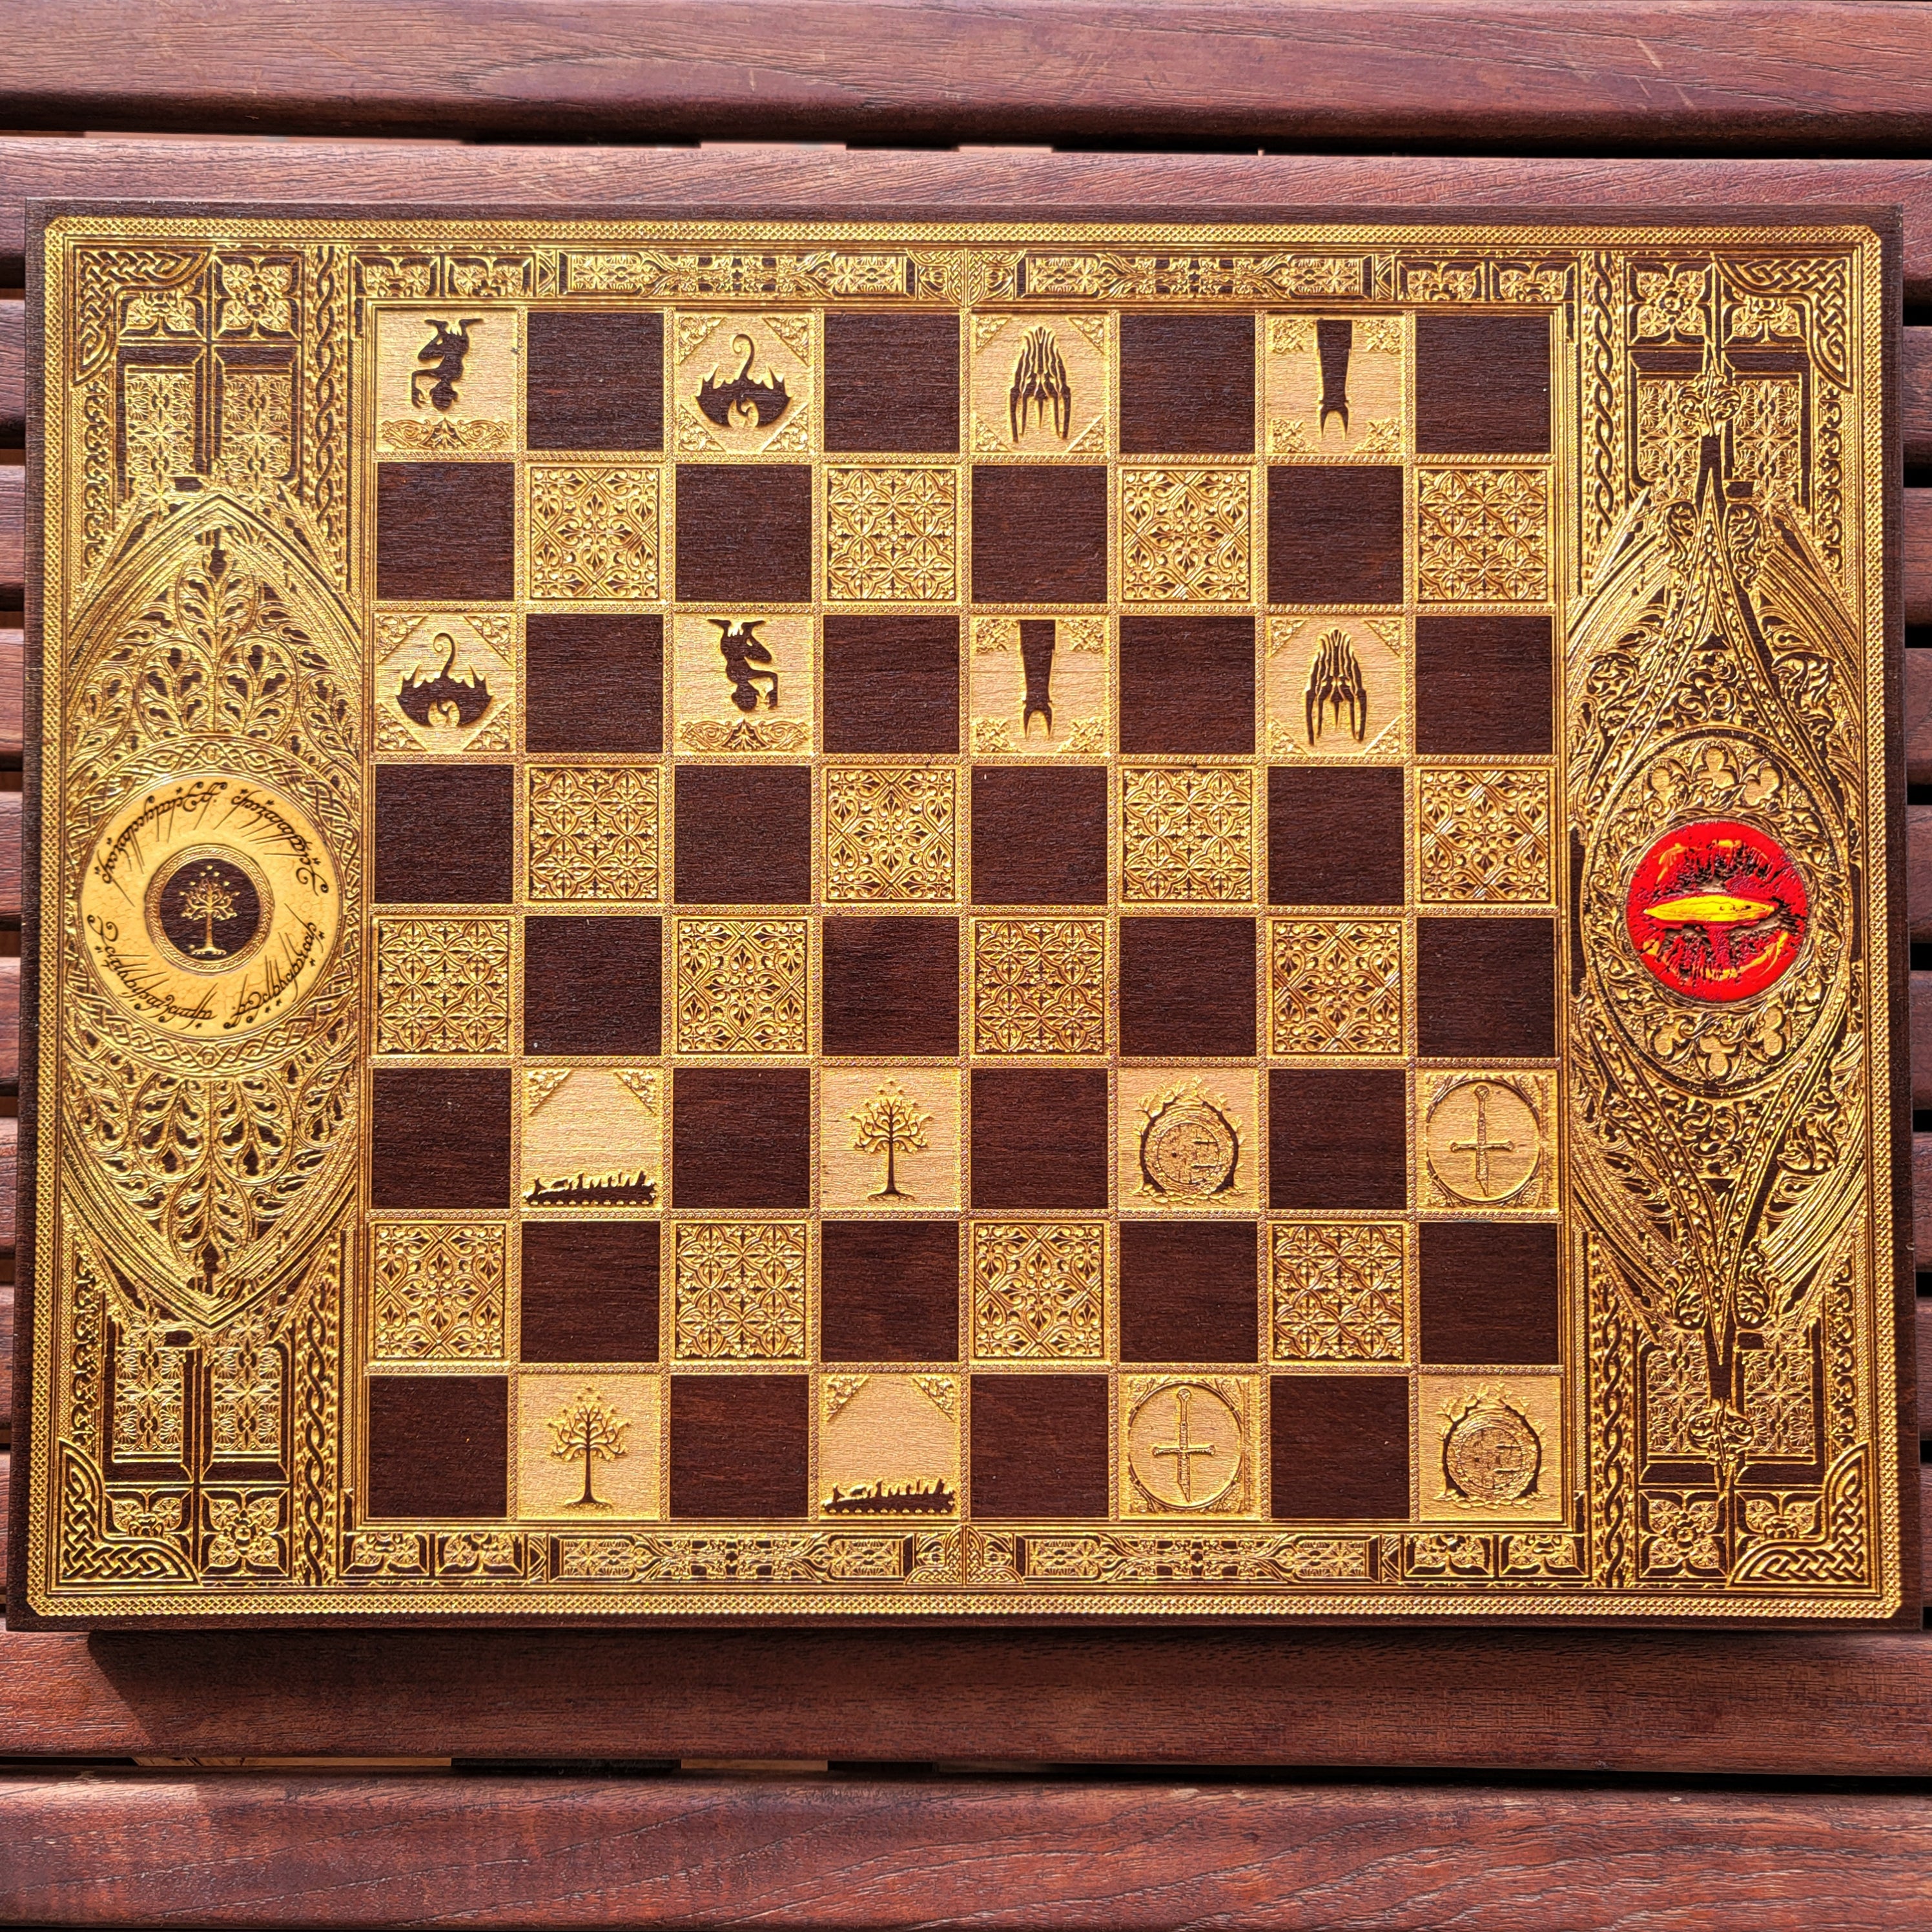 Fantasy Chess Board - Walnut & Gold - A3 Large Size